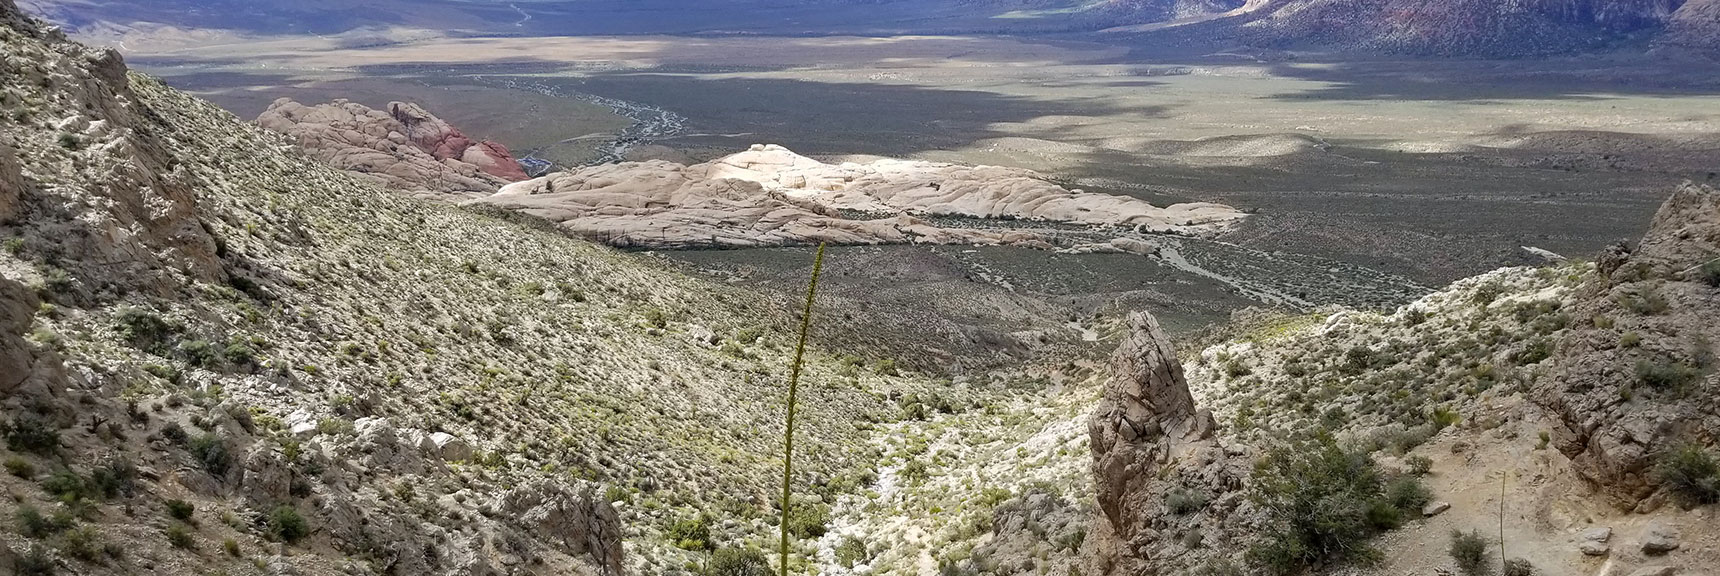 Heading Down Main Turtlehead Peak Trail in Red Rock National Park, Nevada